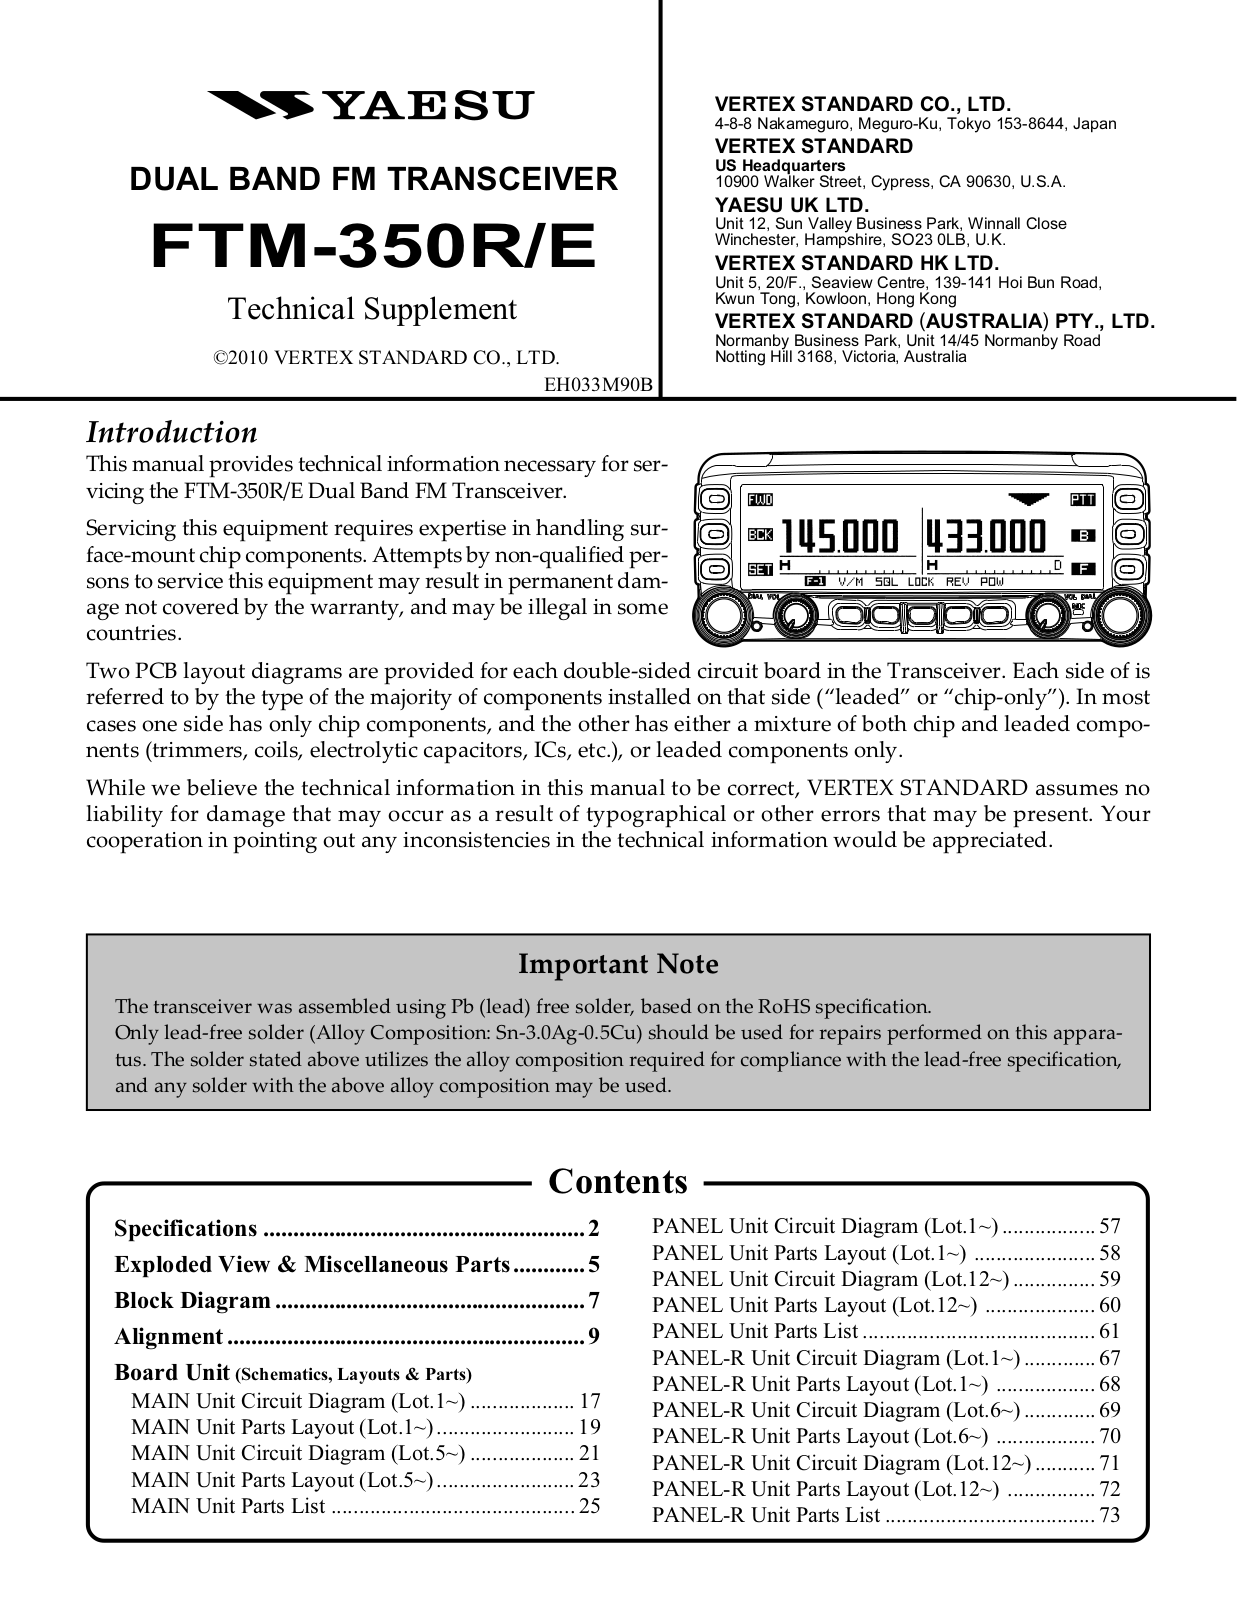 Yaesu FTM-350R Service Manual